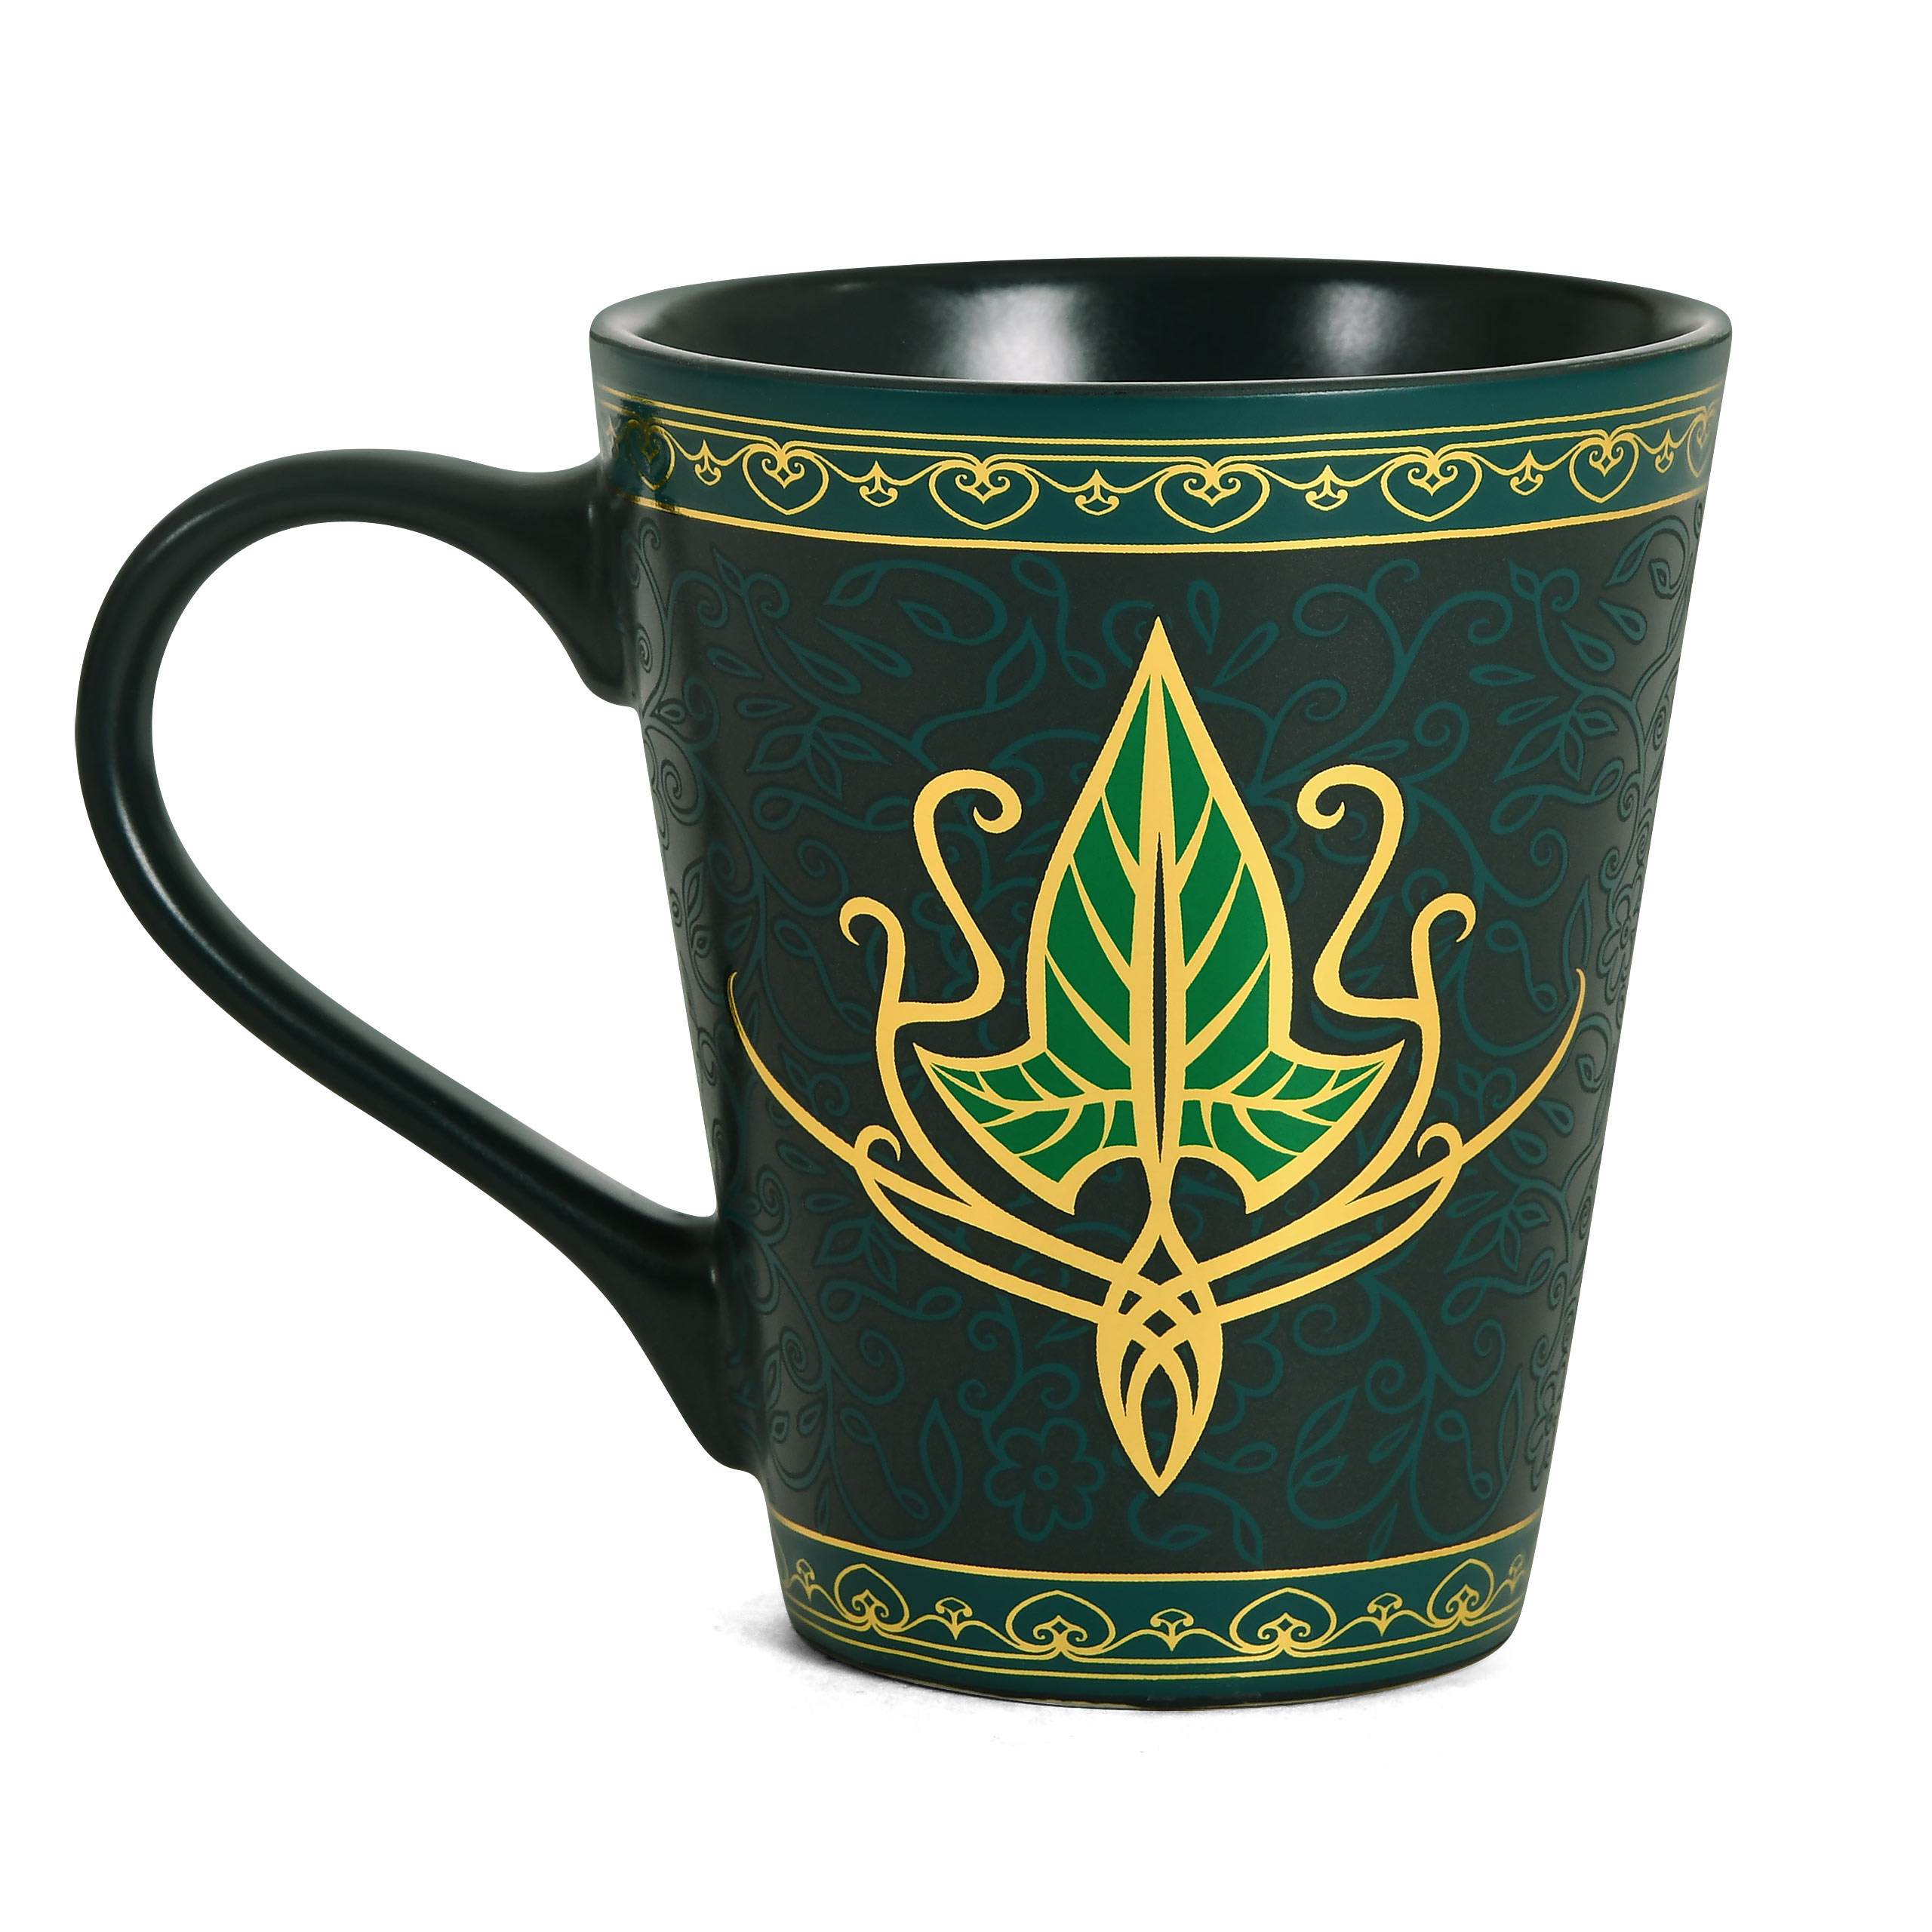 Lord of the Rings - Leaf Brooch Mug